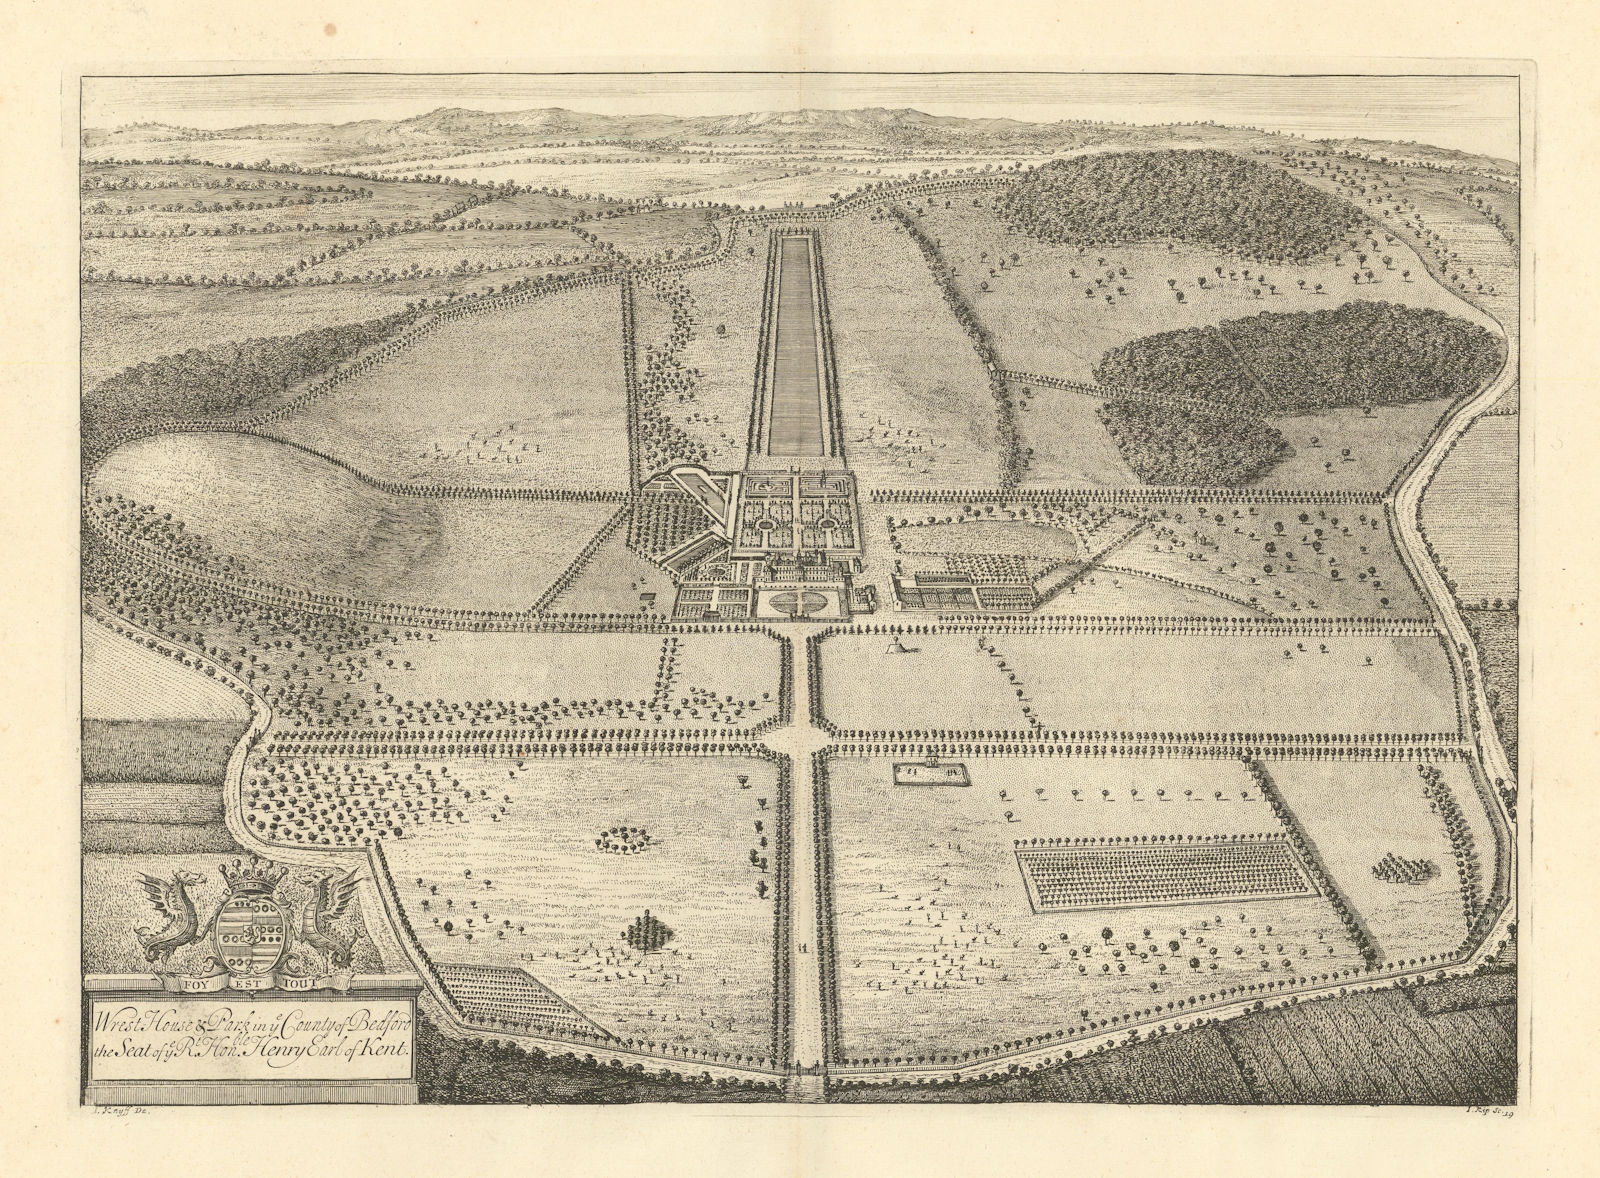 Wrest Park, Silsoe, Bedfordshire by Kip & Knyff. "Wrest House & Park" 1709